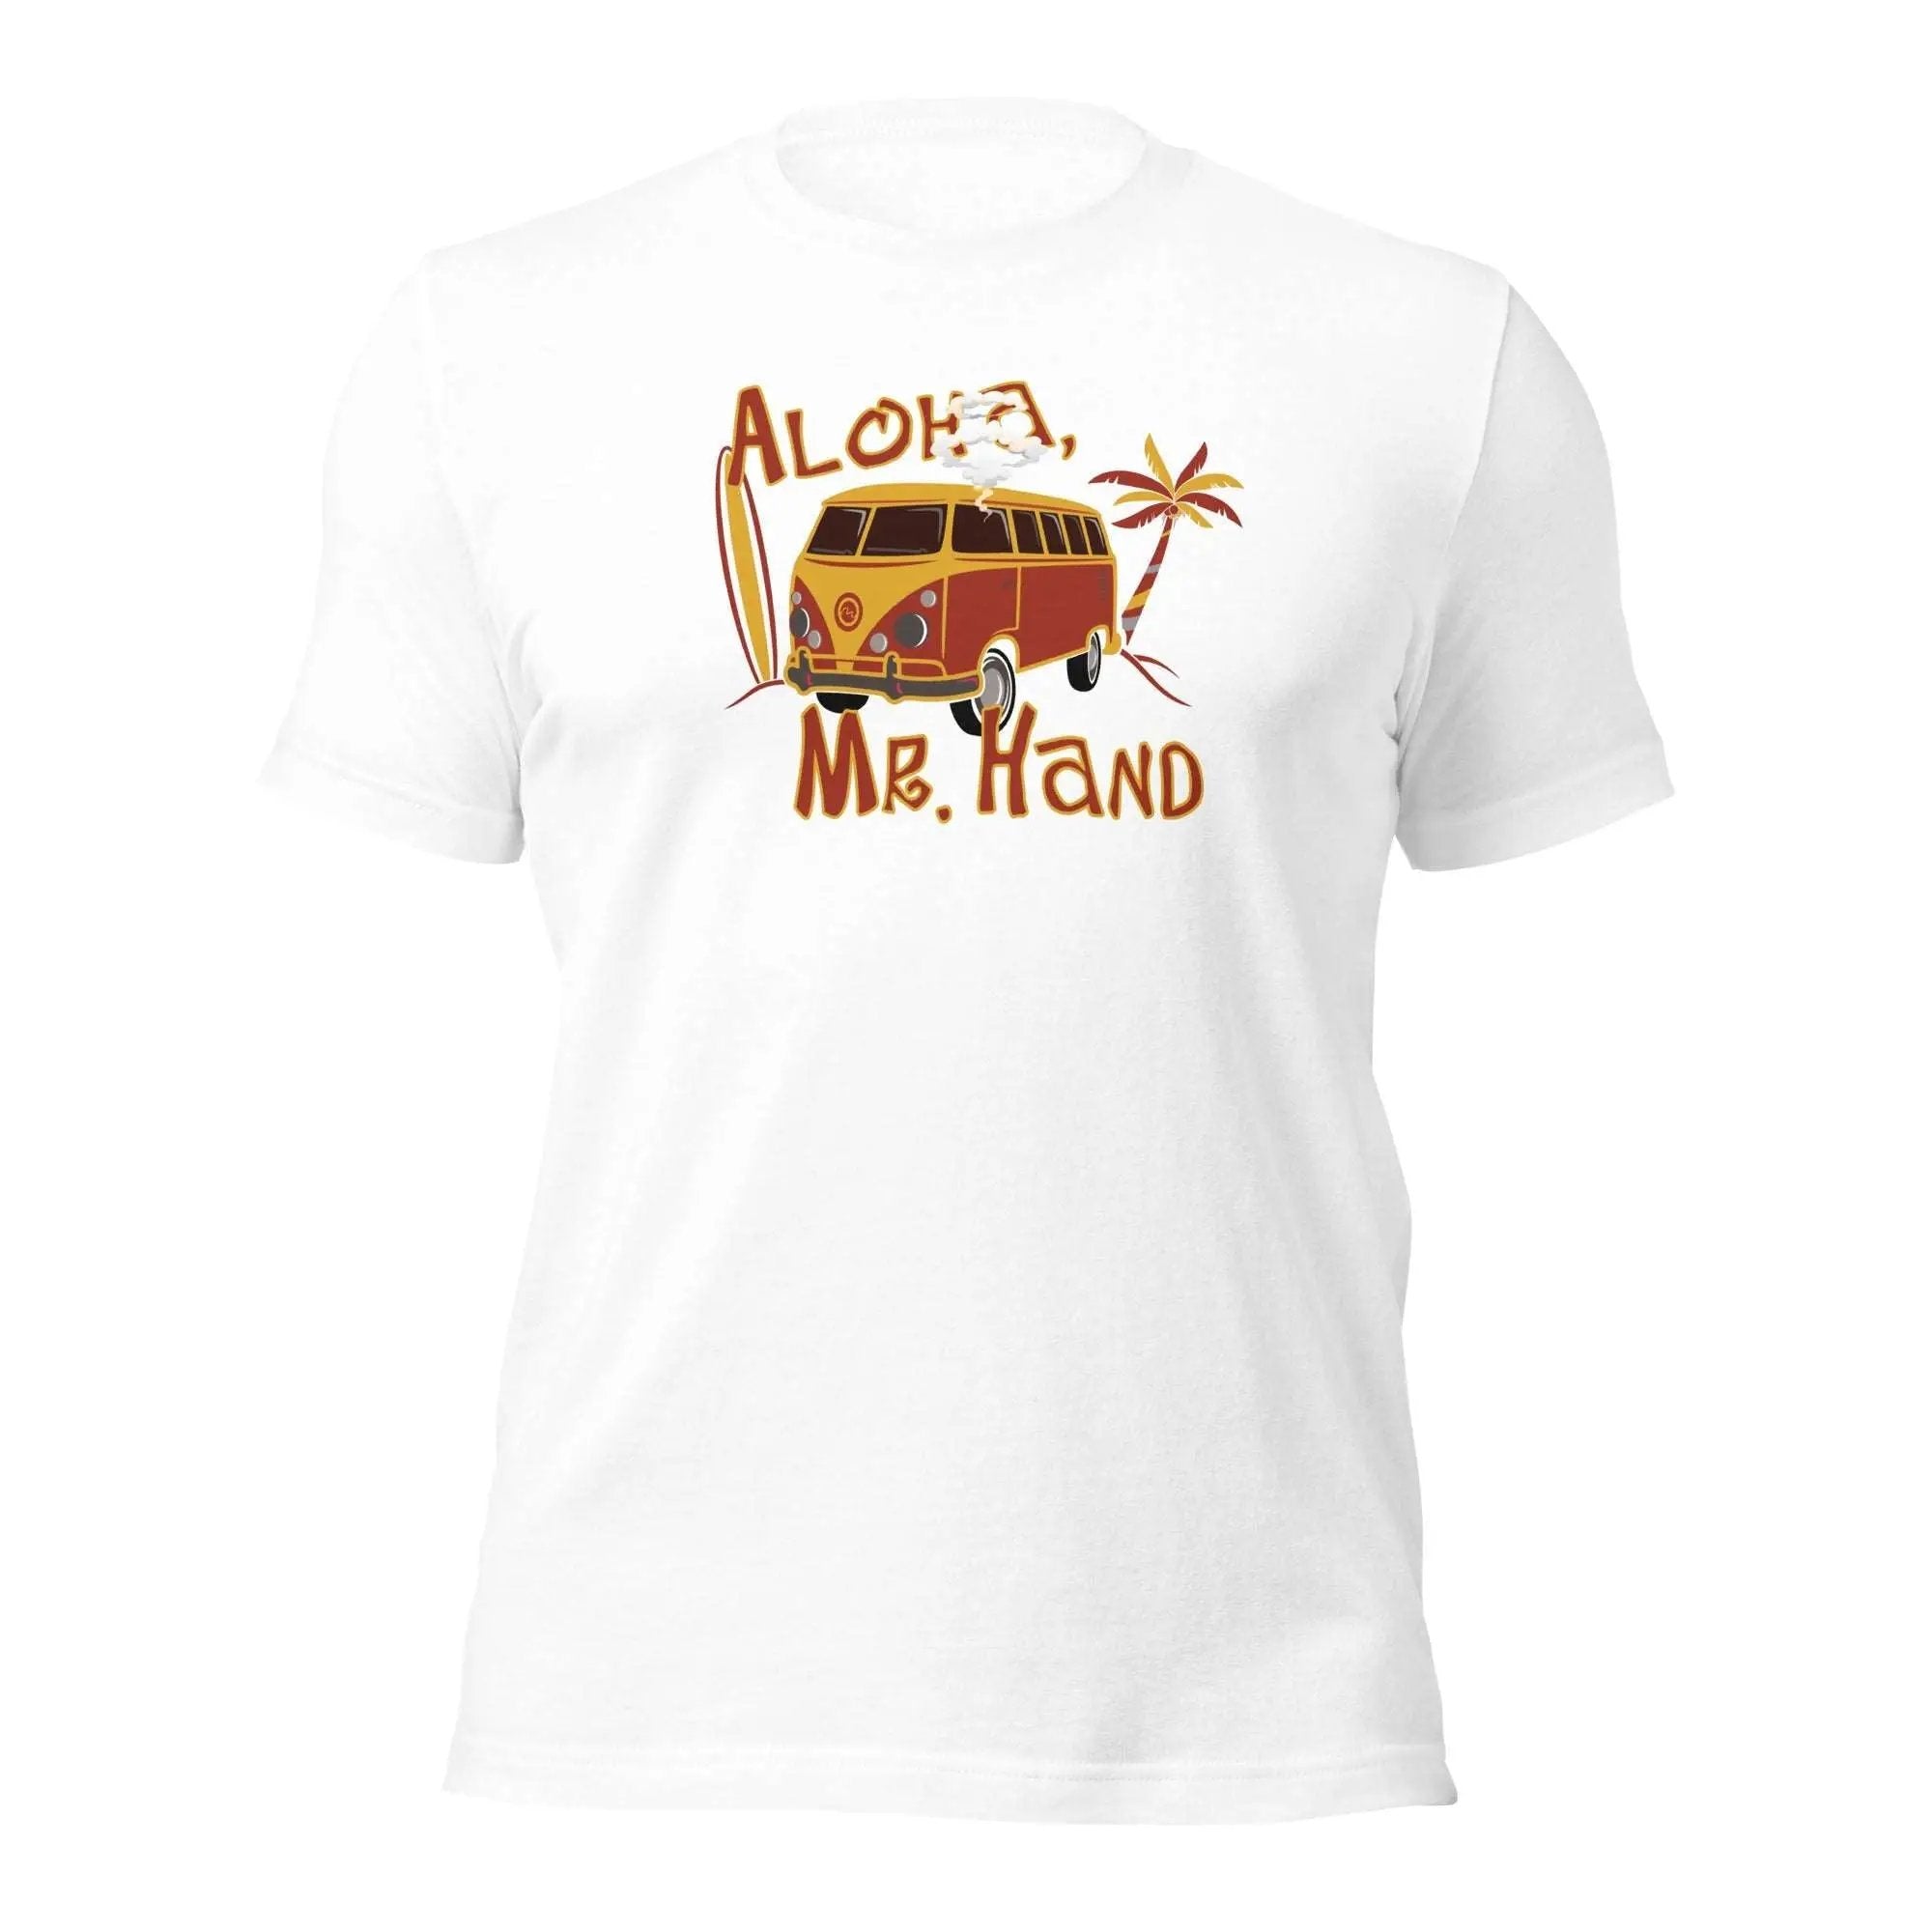 Aloha Mr. Hand! Unisex t-shirt